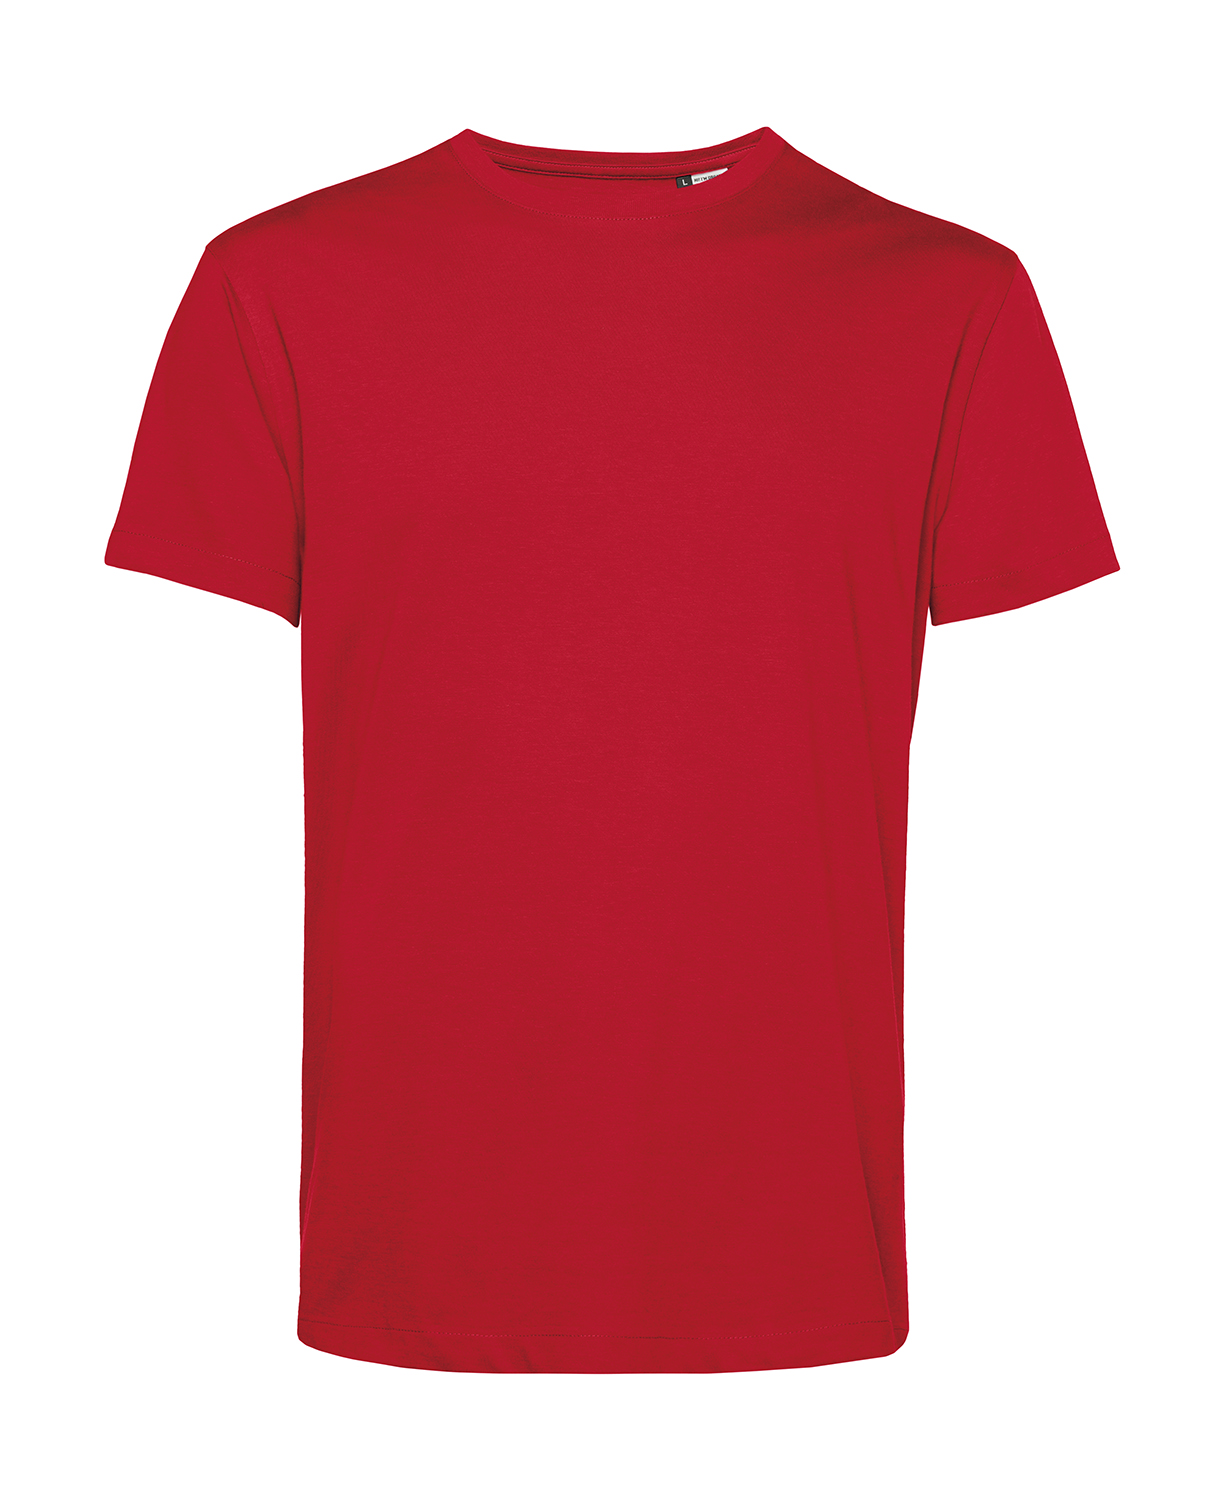 Nachhaltiges T-Shirt Herren 2Takter - Lieber Rost statt Plastik MZ